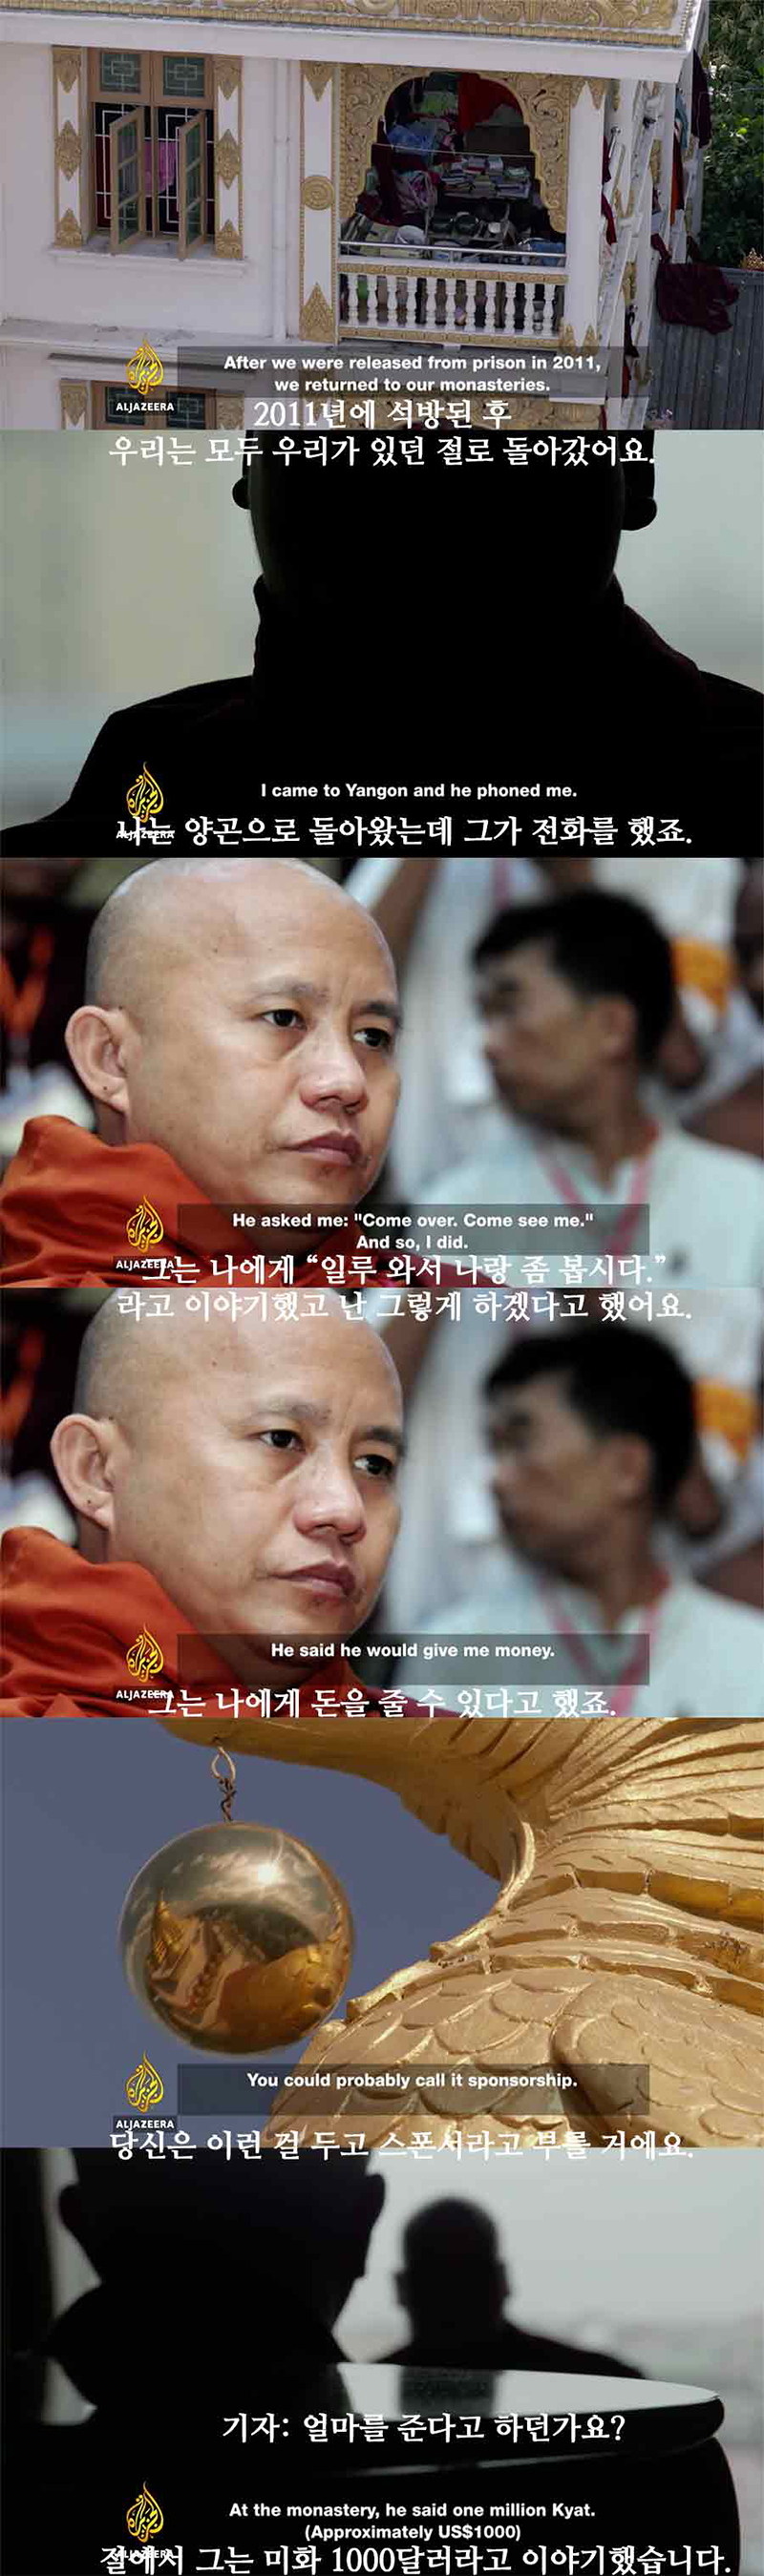 Wirathu_Bribery.jpg